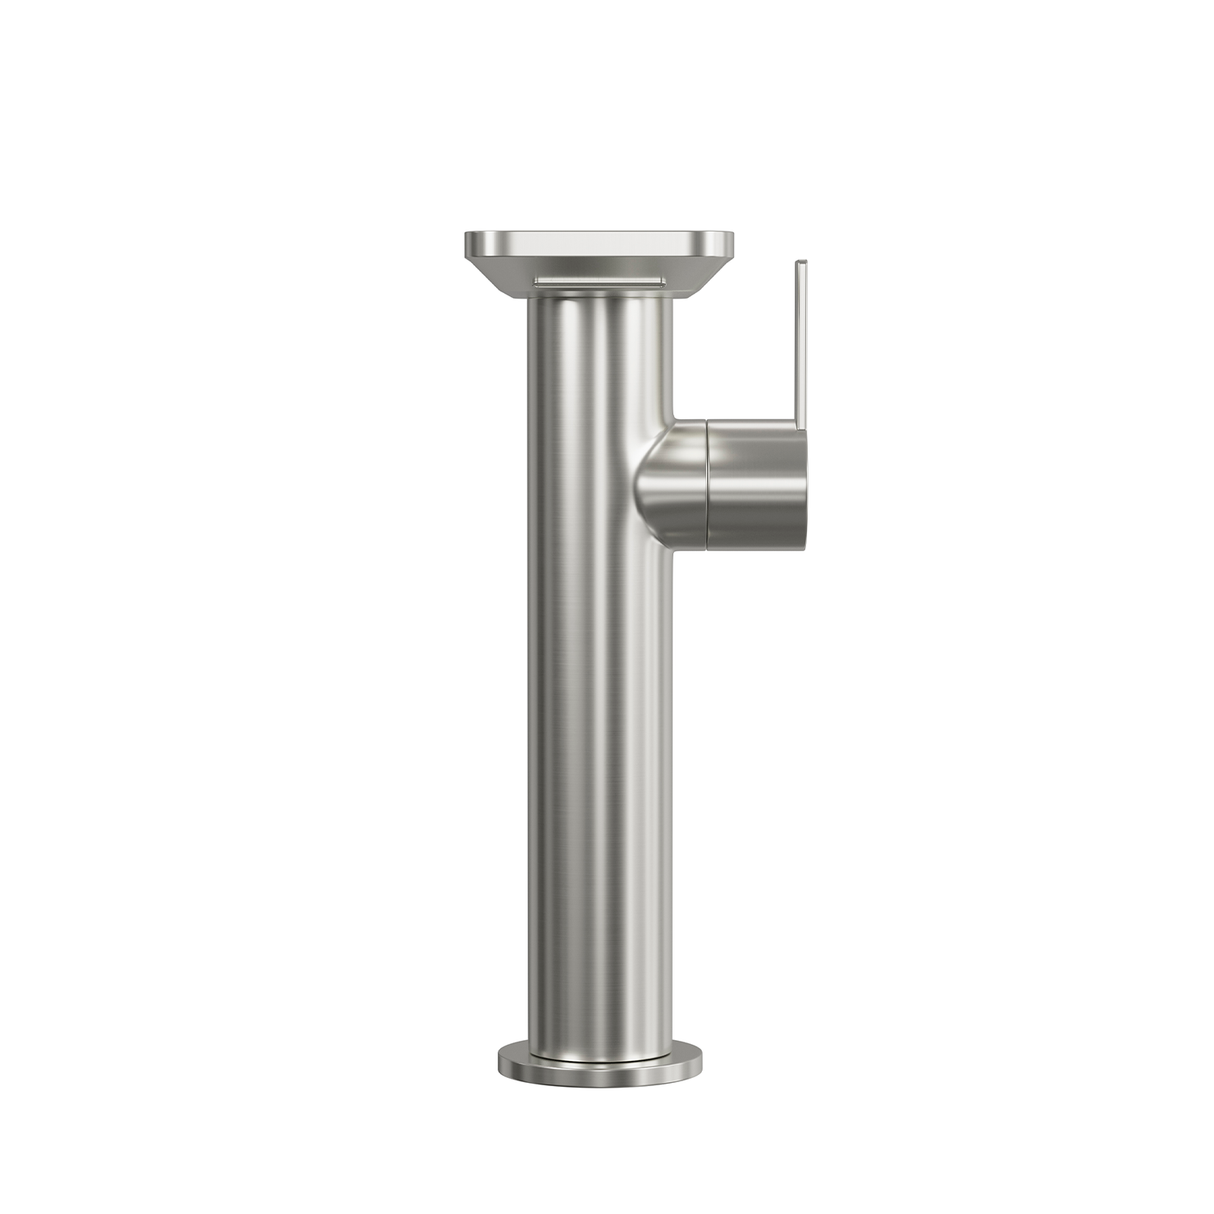 DAX Brass Single Handle Bathroom Waterfall Vessel Basin Faucet, Brushed Nickel DAX-8205A-BN